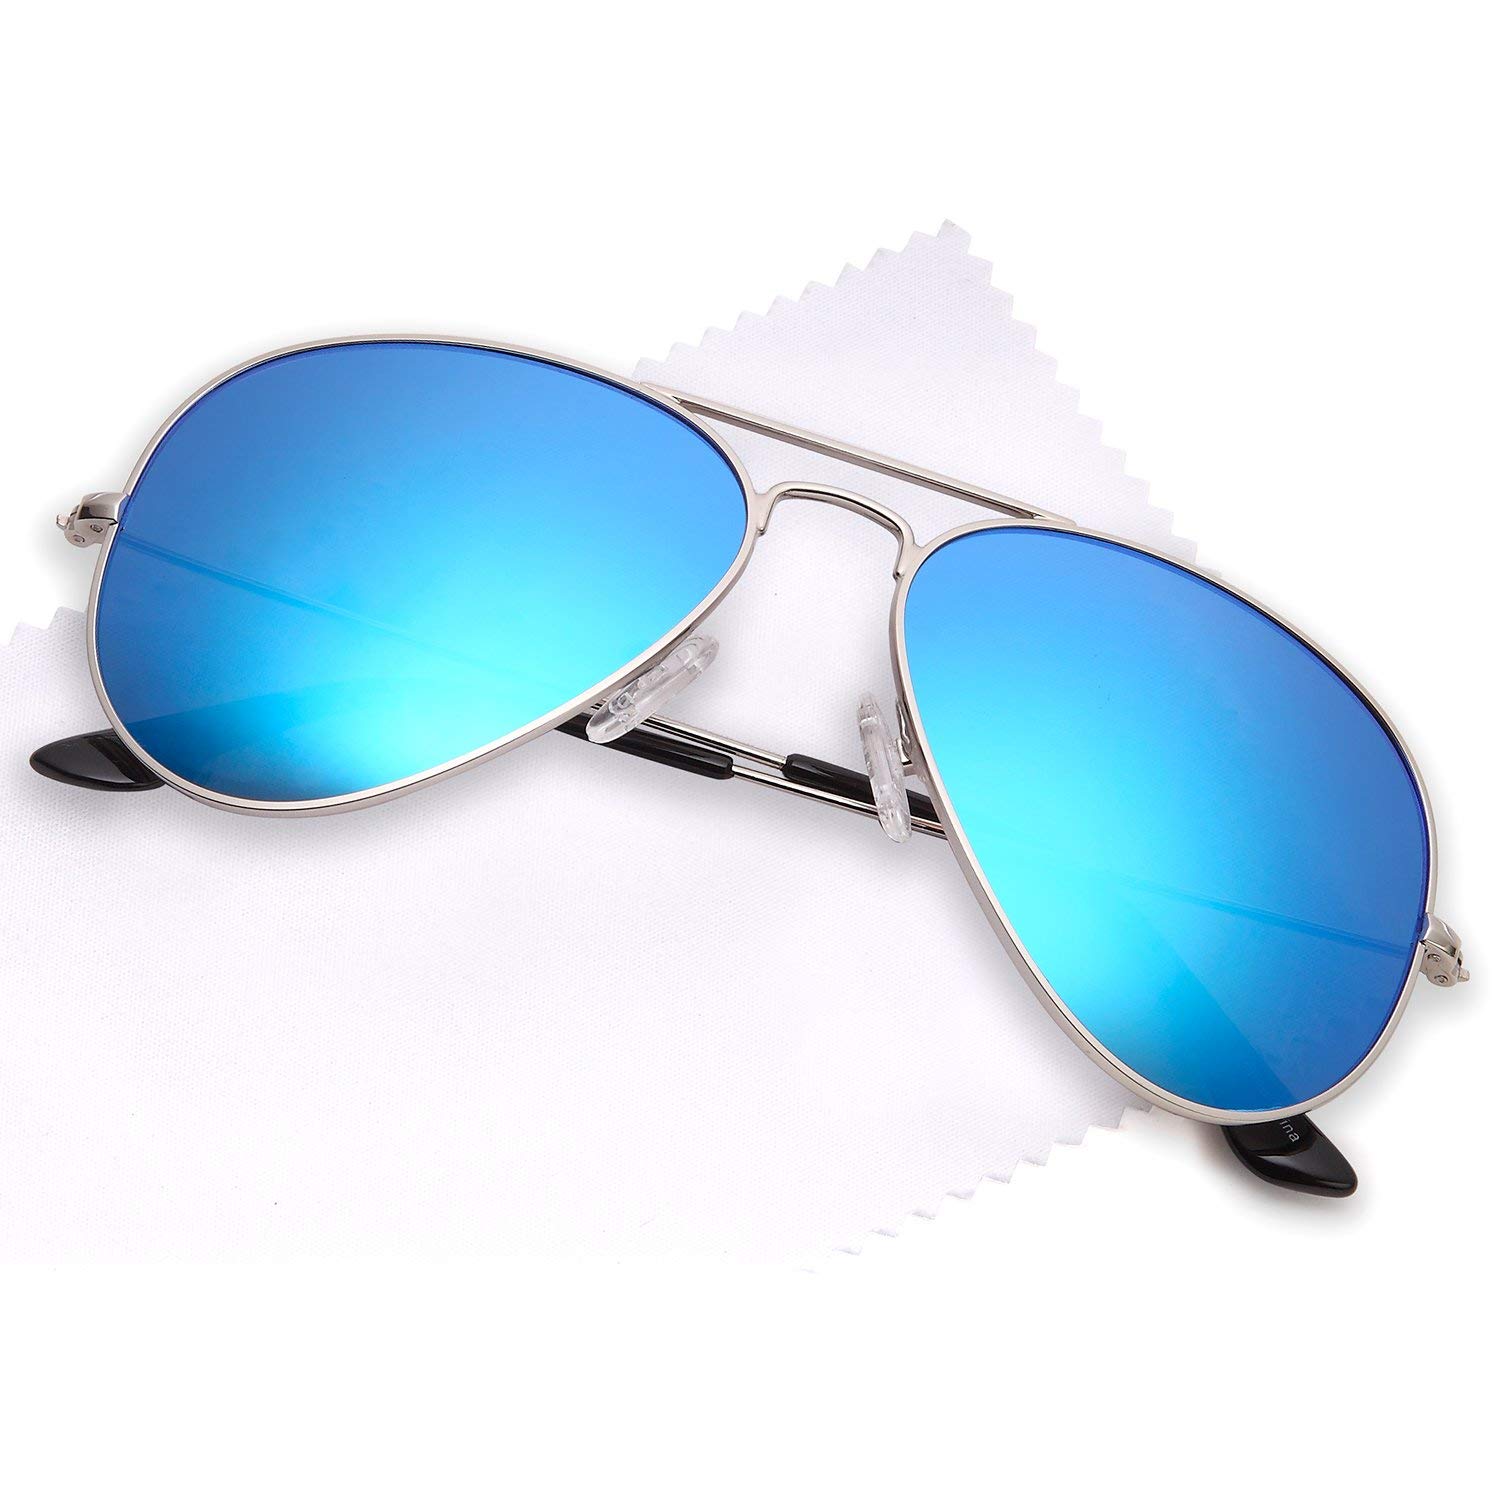 Amazon.com: JETPAL Premium Classic Aviator UV400 Sunglasses w Flash ...